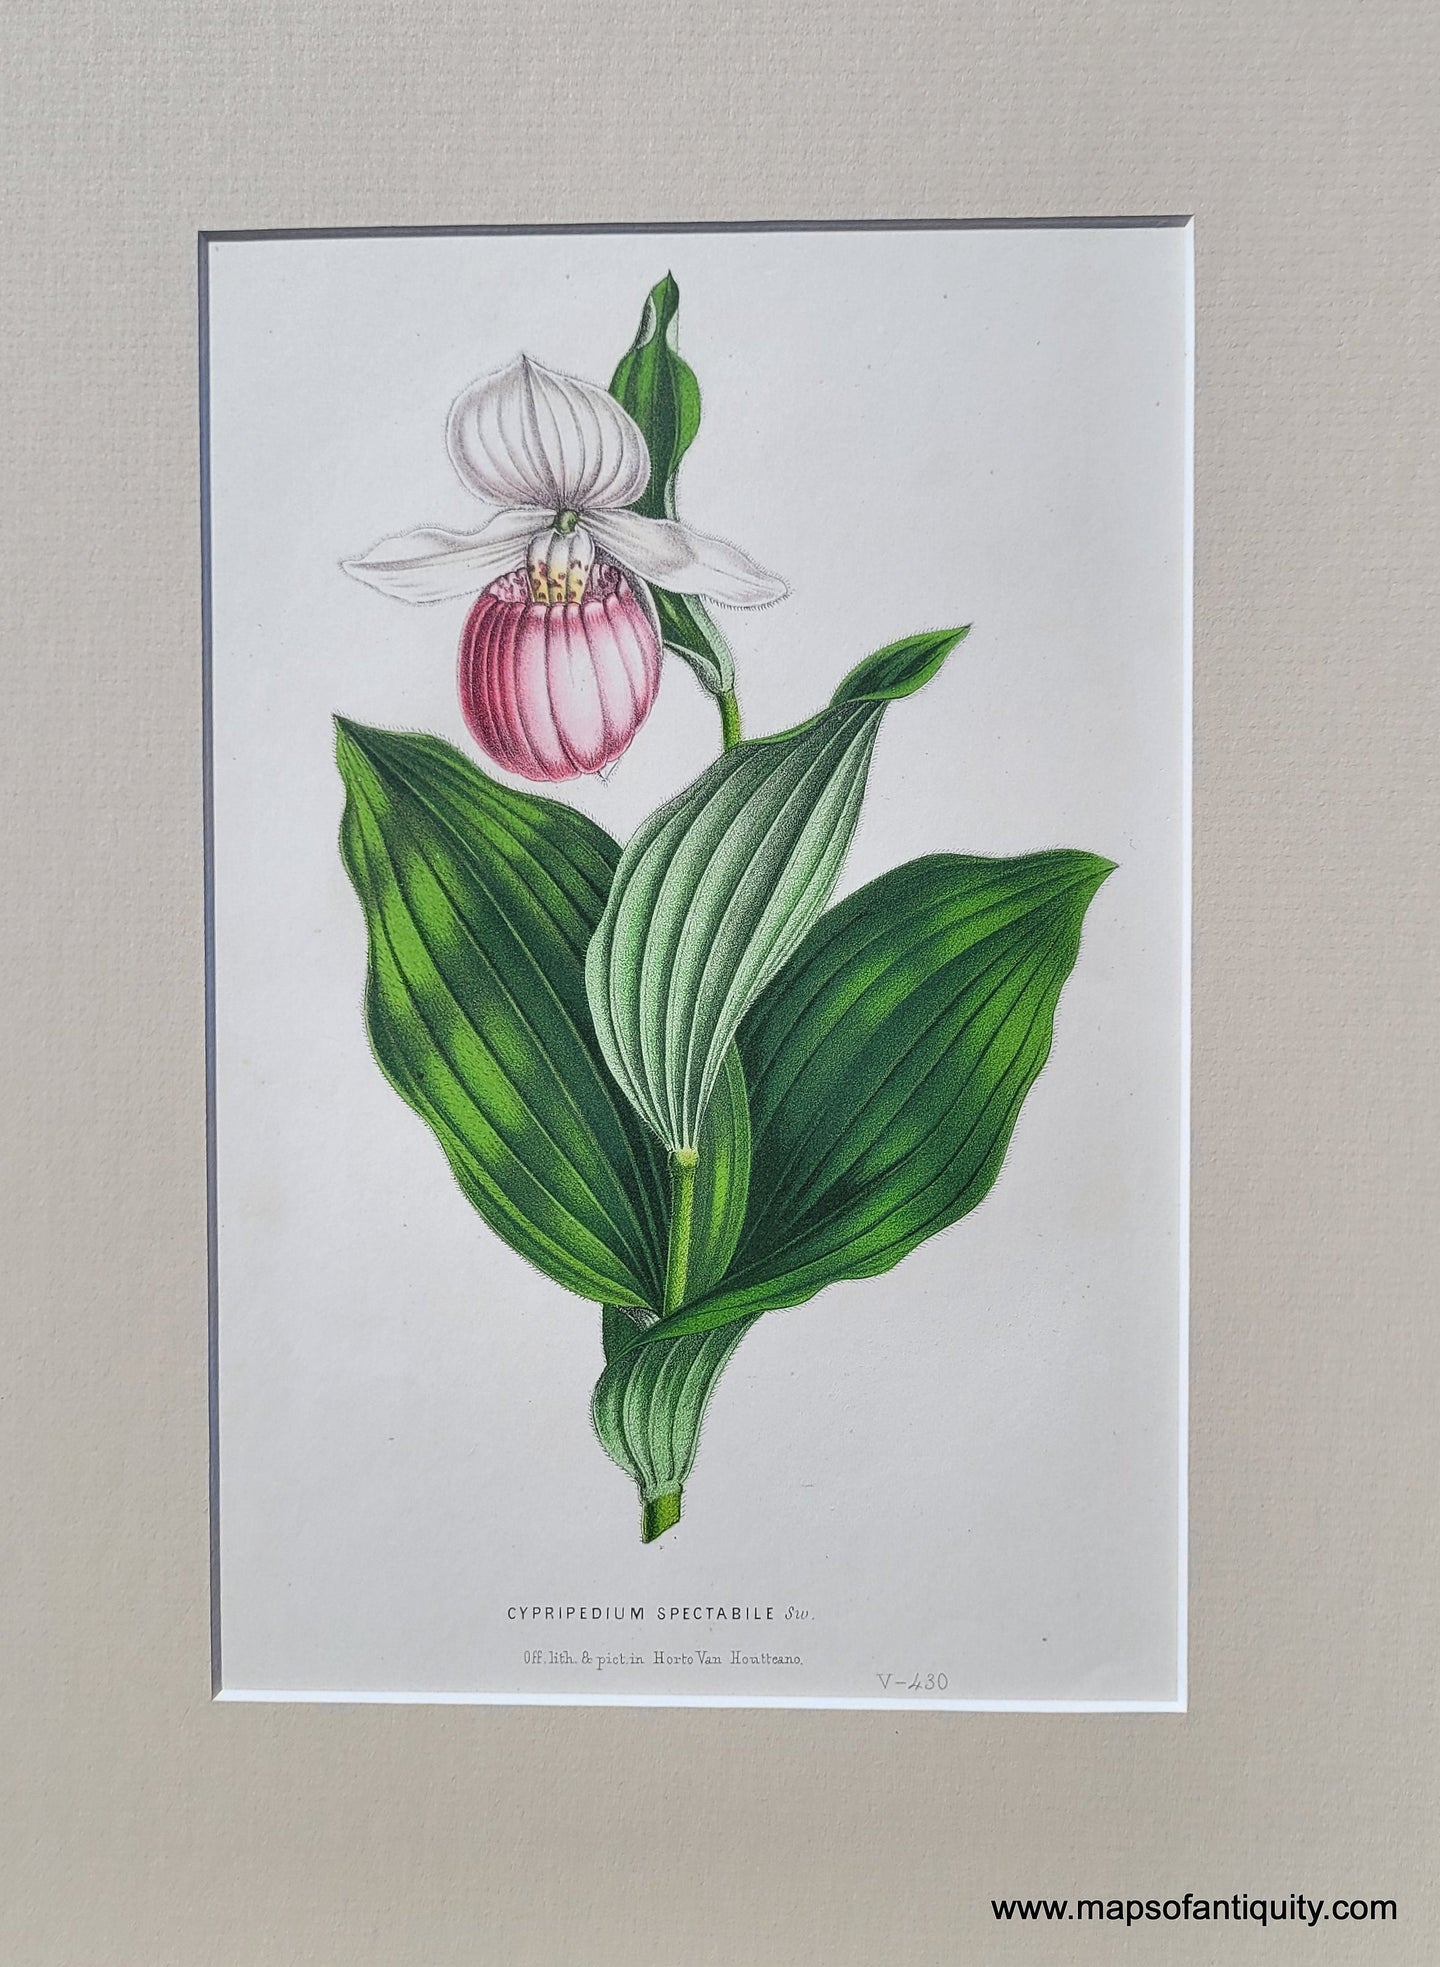 Genuine-Antique-Print-Lady's-Slipper-Orchid-Cypripedium-spectabile-1850-Van-Houtte-Maps-Of-Antiquity